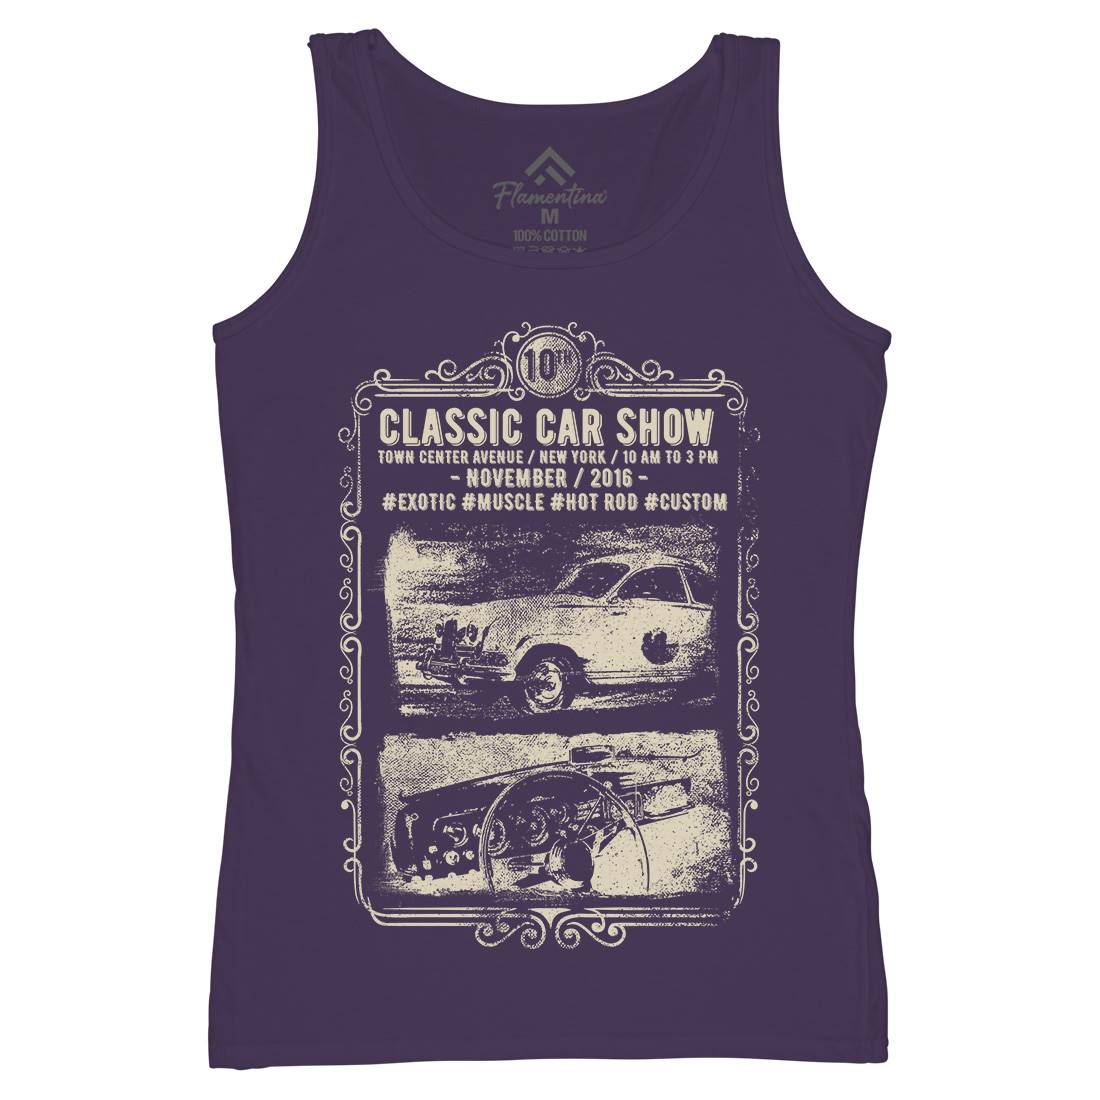 Classic Car Show Womens Organic Tank Top Vest Cars C917